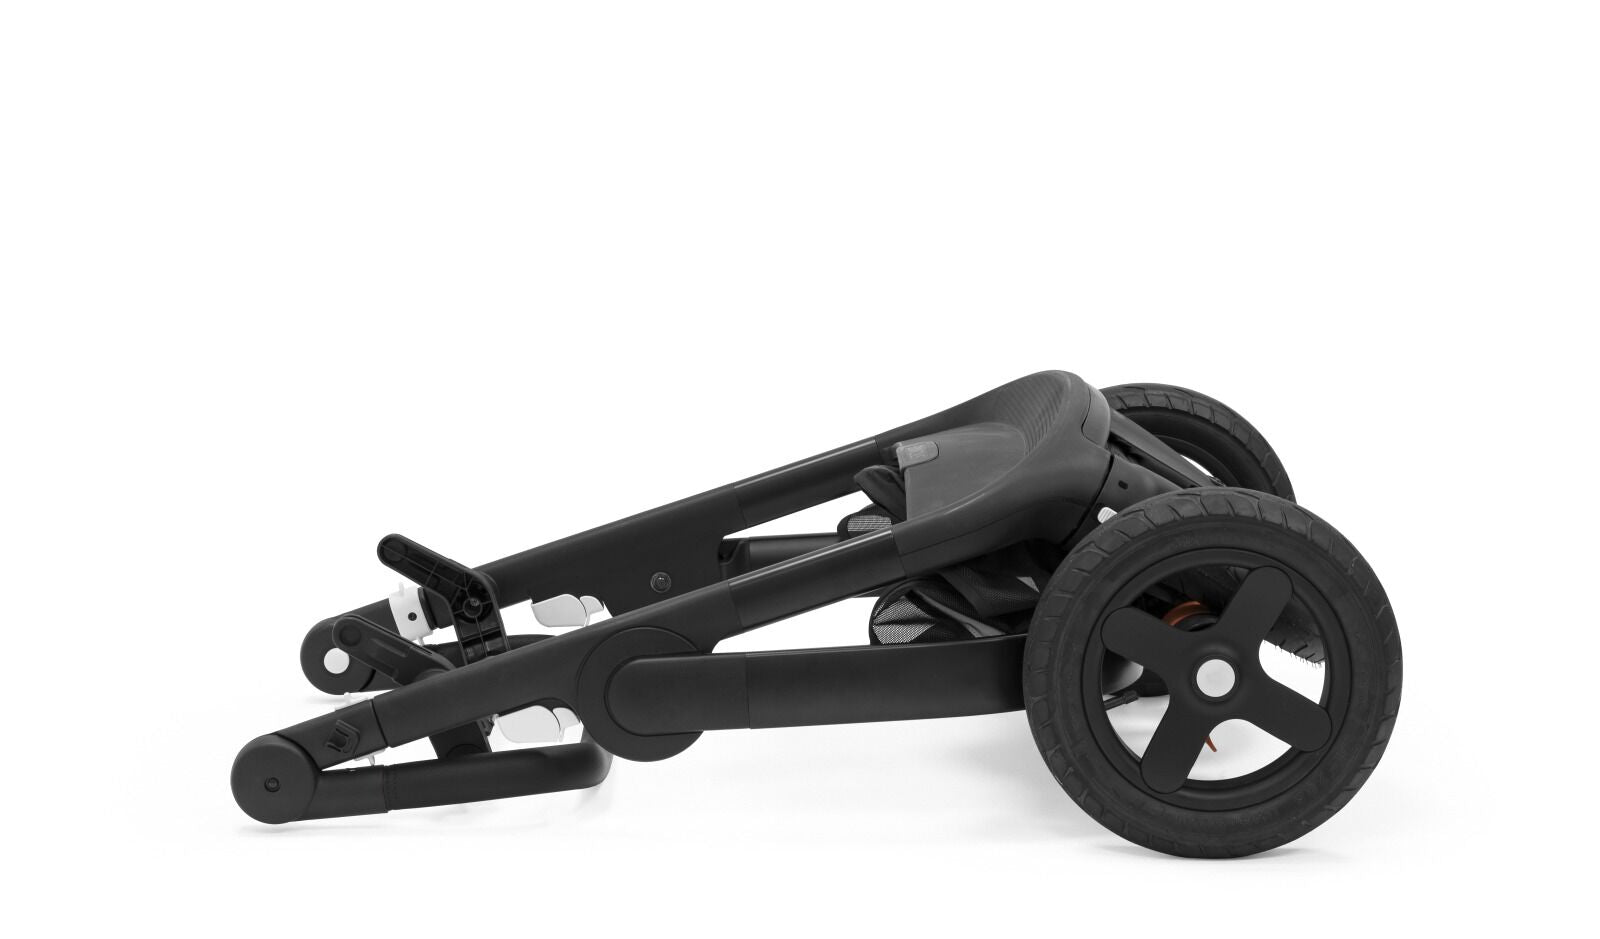 Stokke Trailz Terrain Black Standard Stroller | Baby Earth